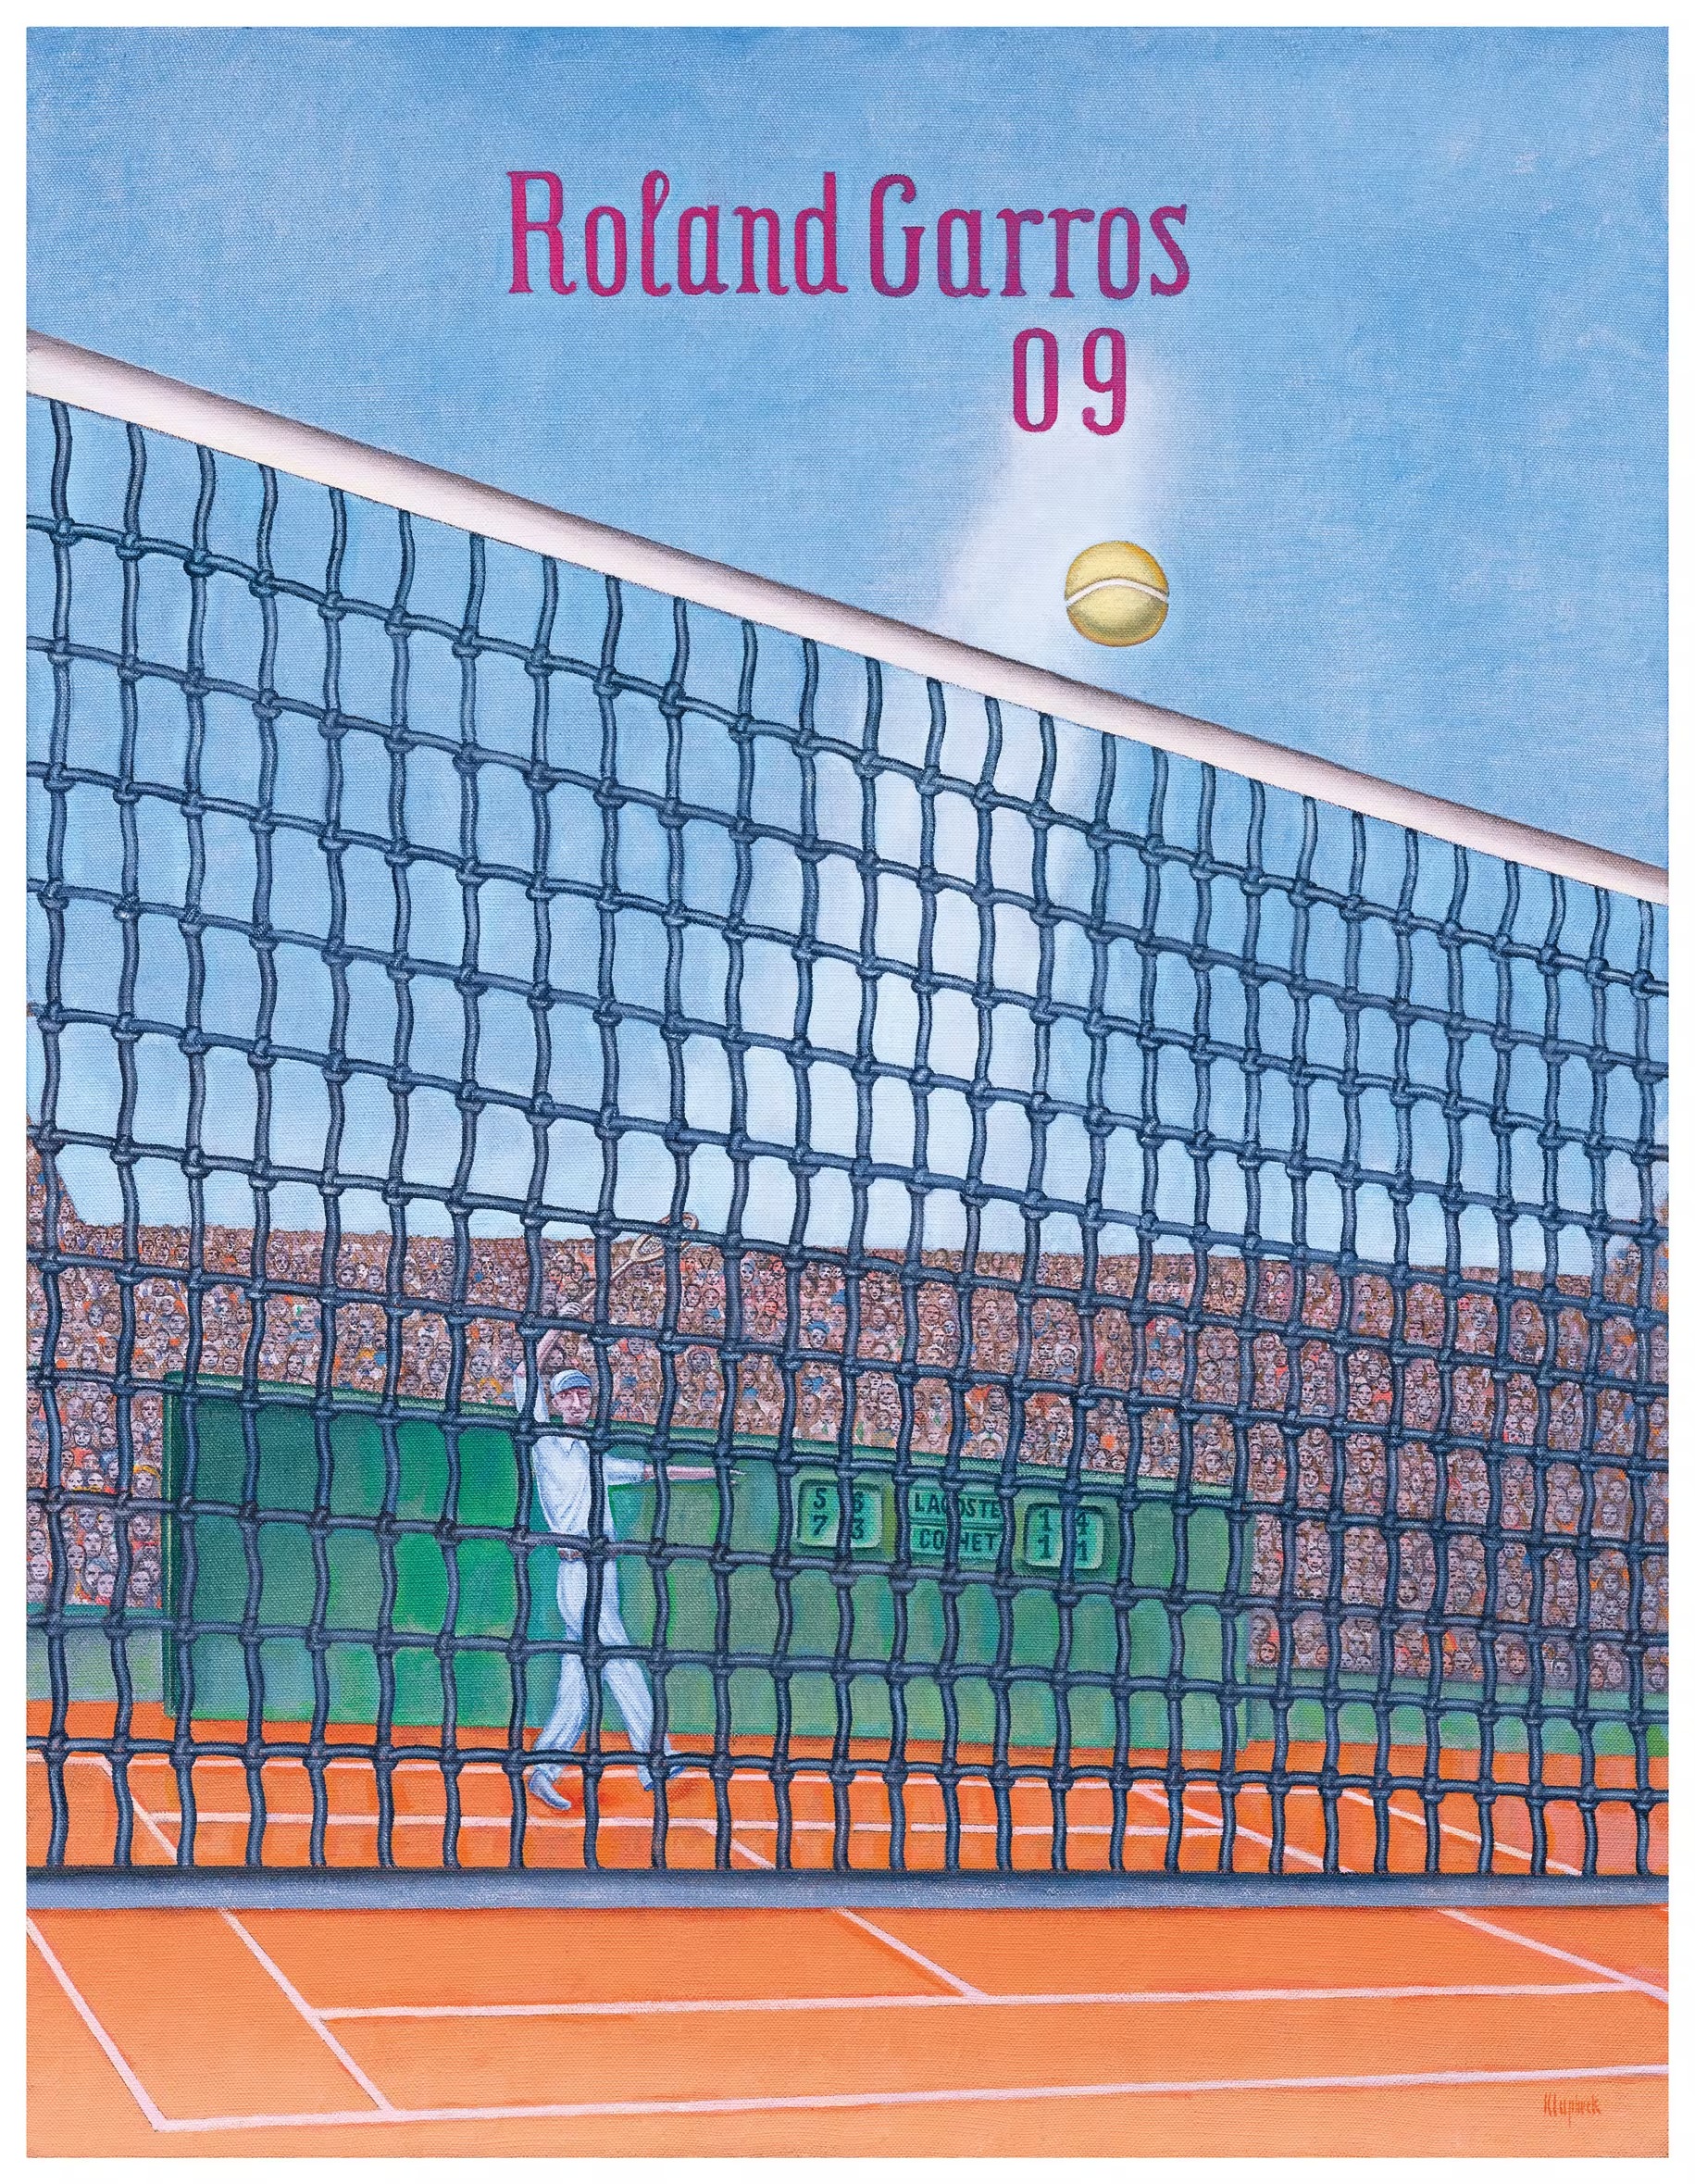 Roland Garros 2009 poster